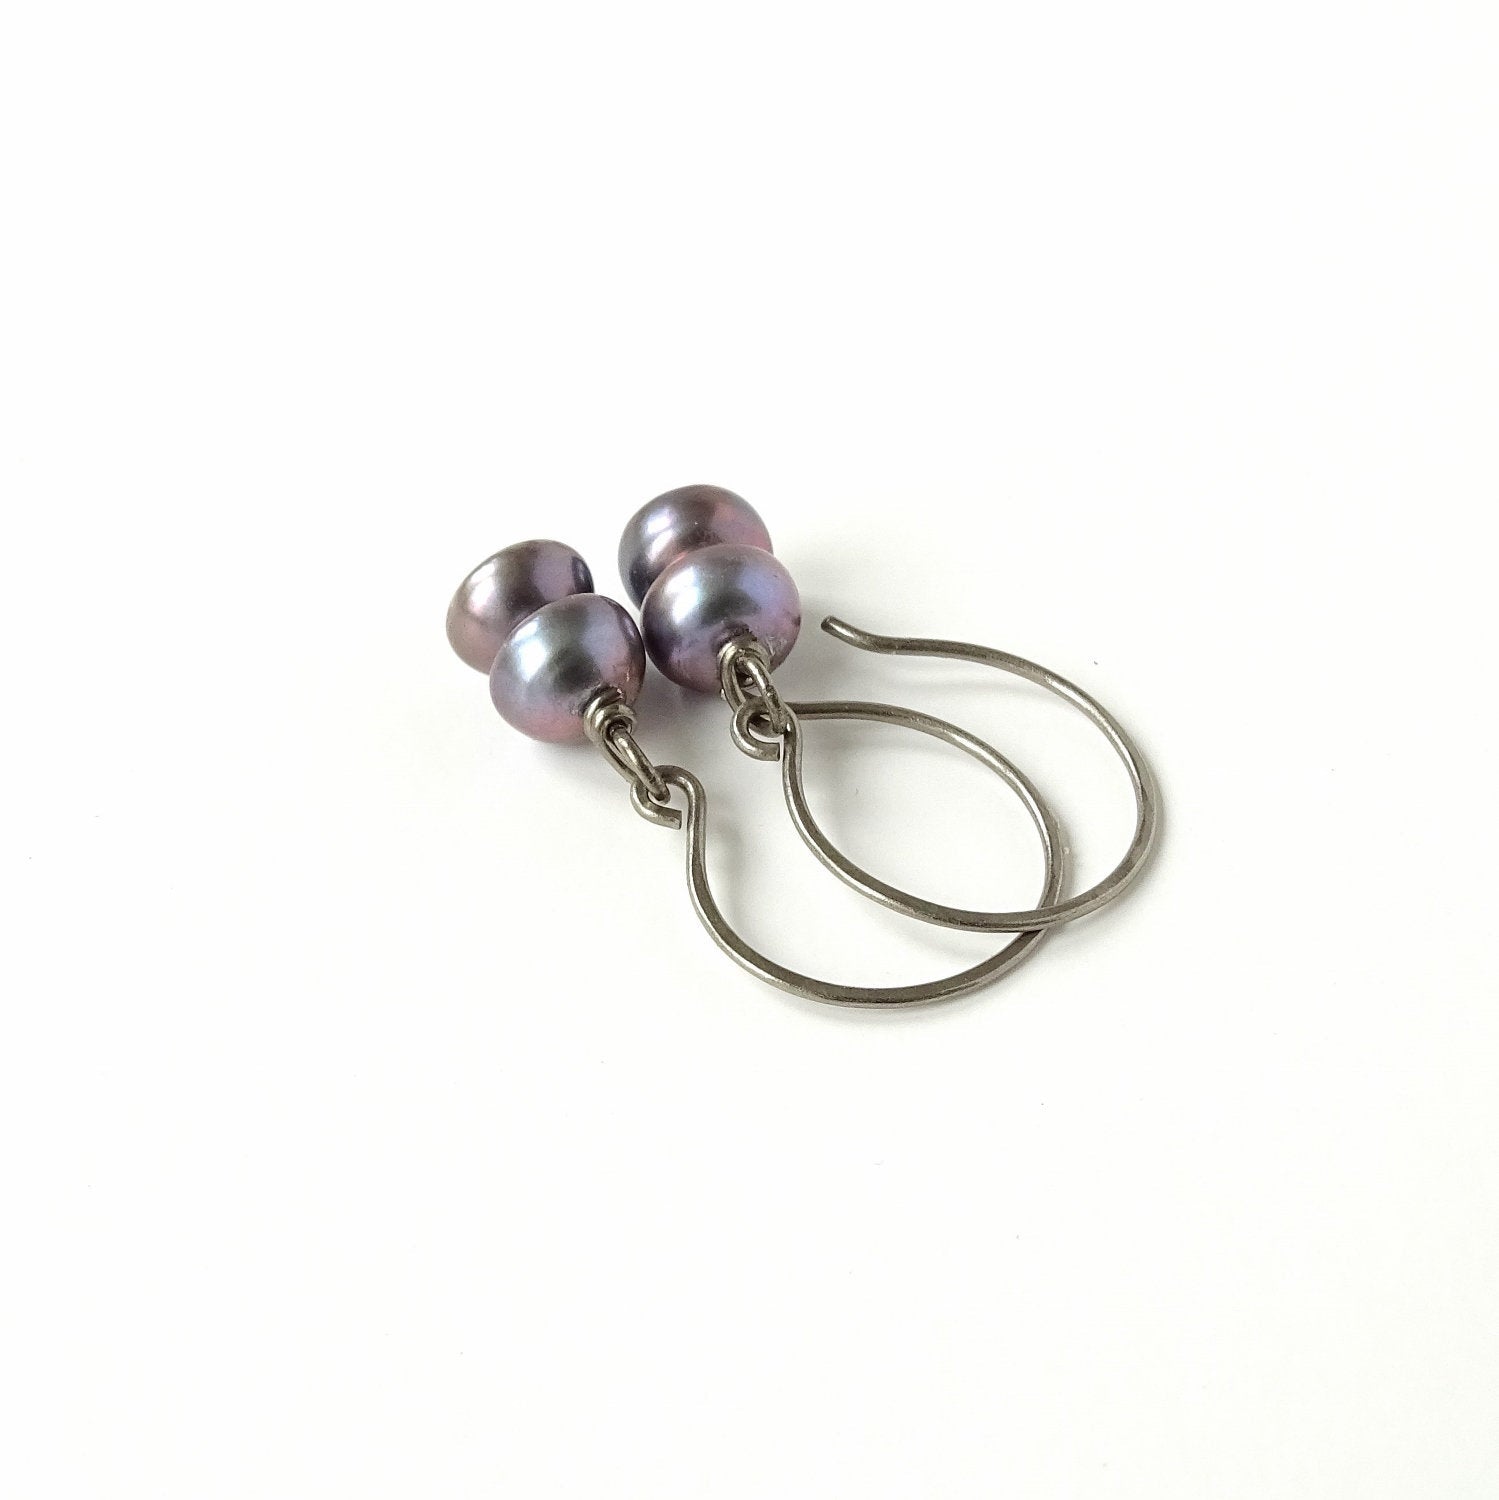 Gray Peacock Pearl Niobium Earrings, Grey Button Pearl Titanium Earrings for Sensitive Ears, Hypoallergenic Nickel Free, Freshwater Pearls